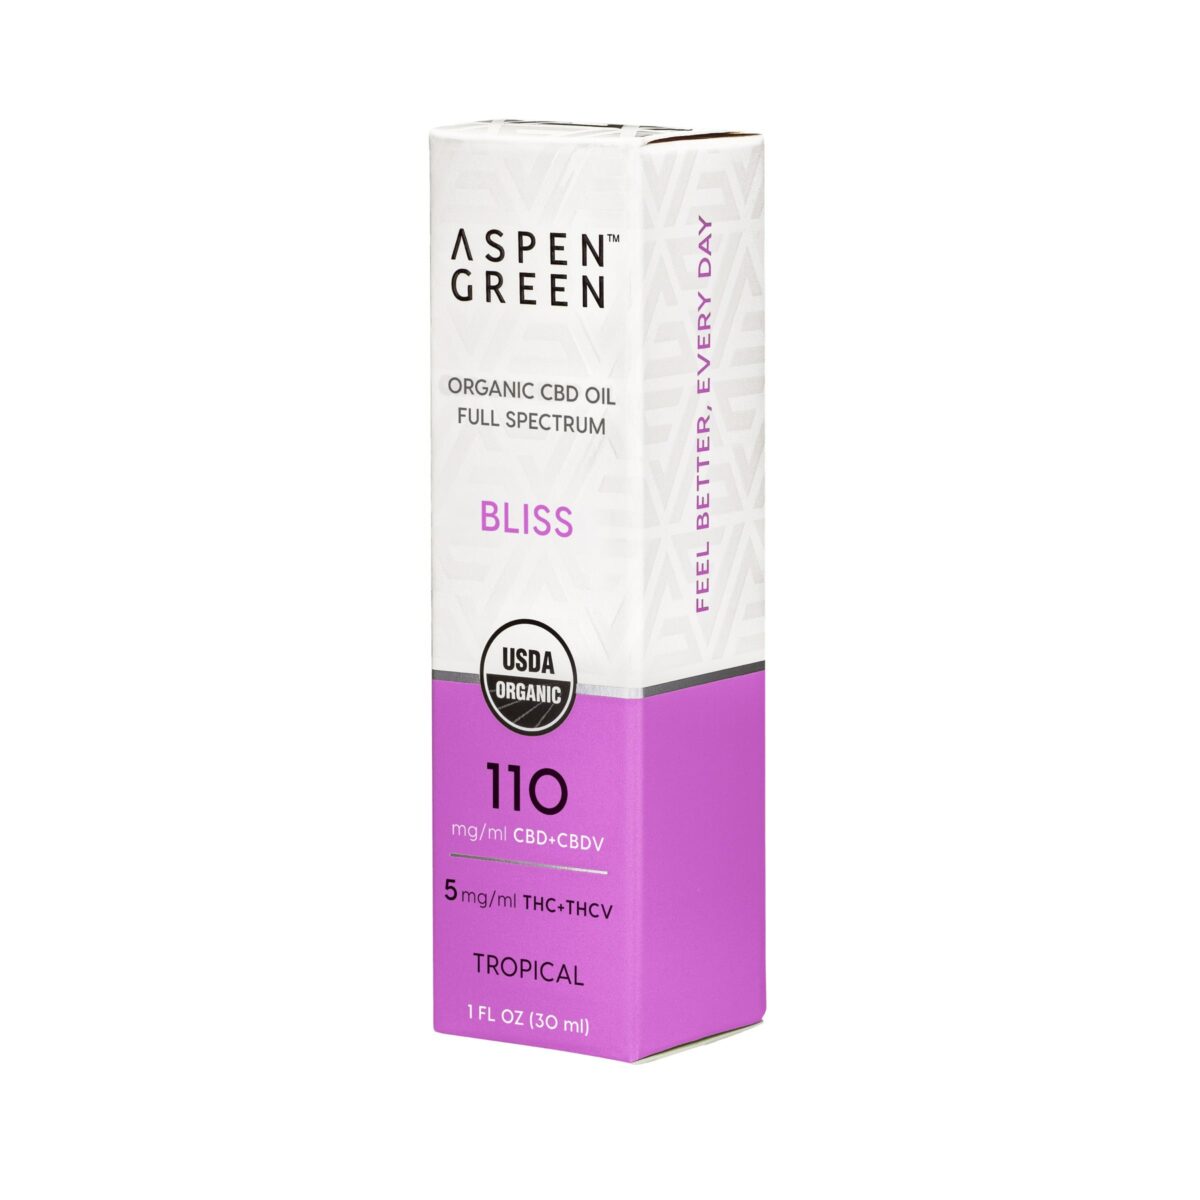 Aspen Green USDA Certified Organic CBD Oil Box, Bliss (110mg/ml CBD), Tropical Flavor